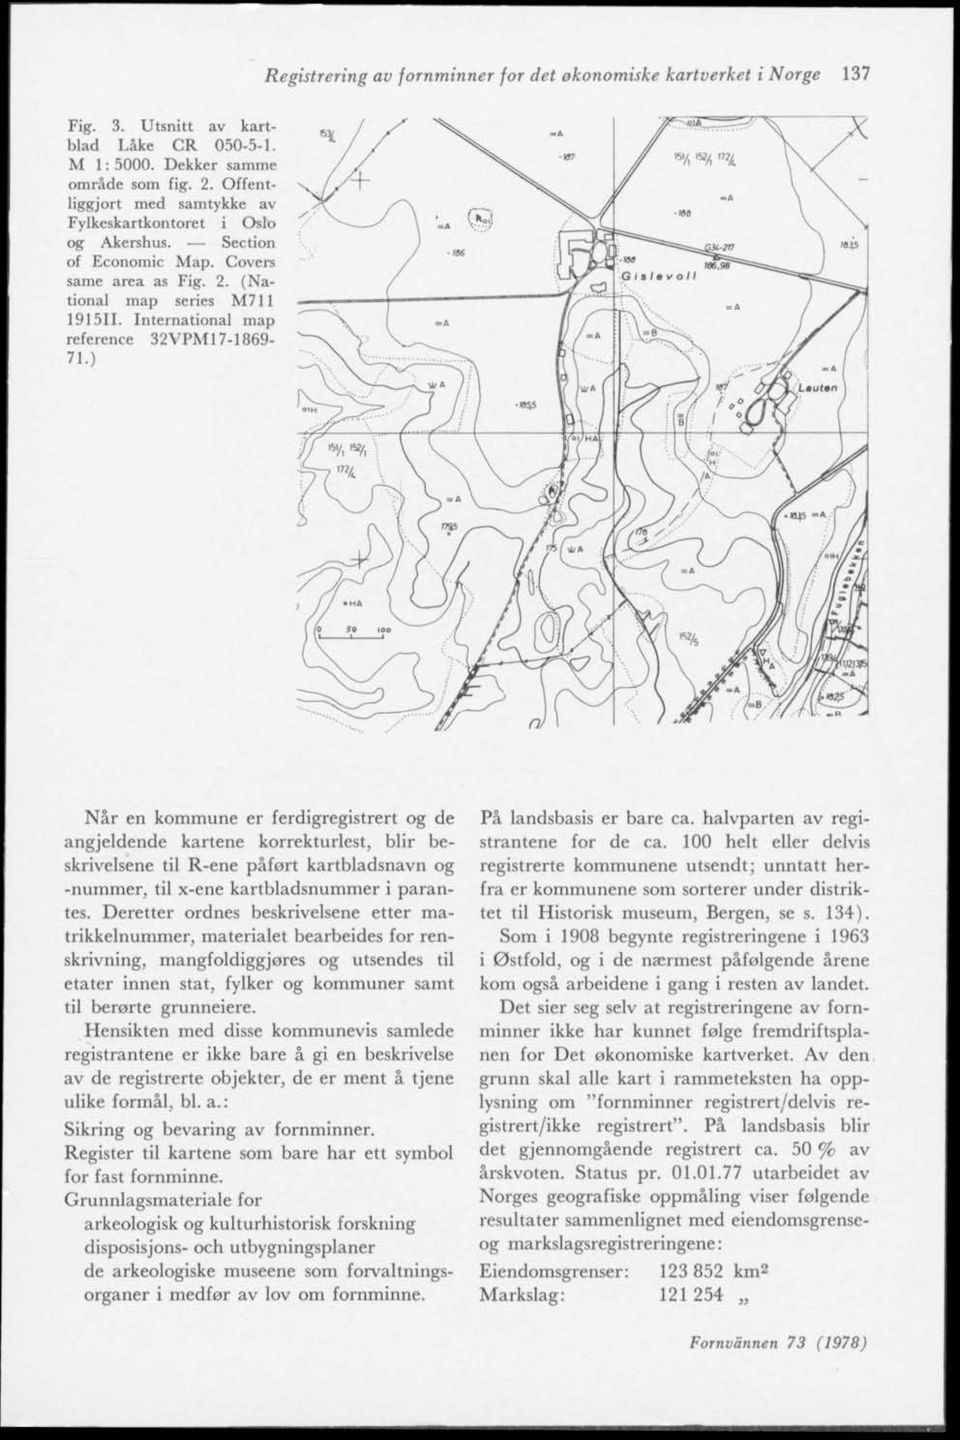 International map reference 32VPM17-1869- 71.